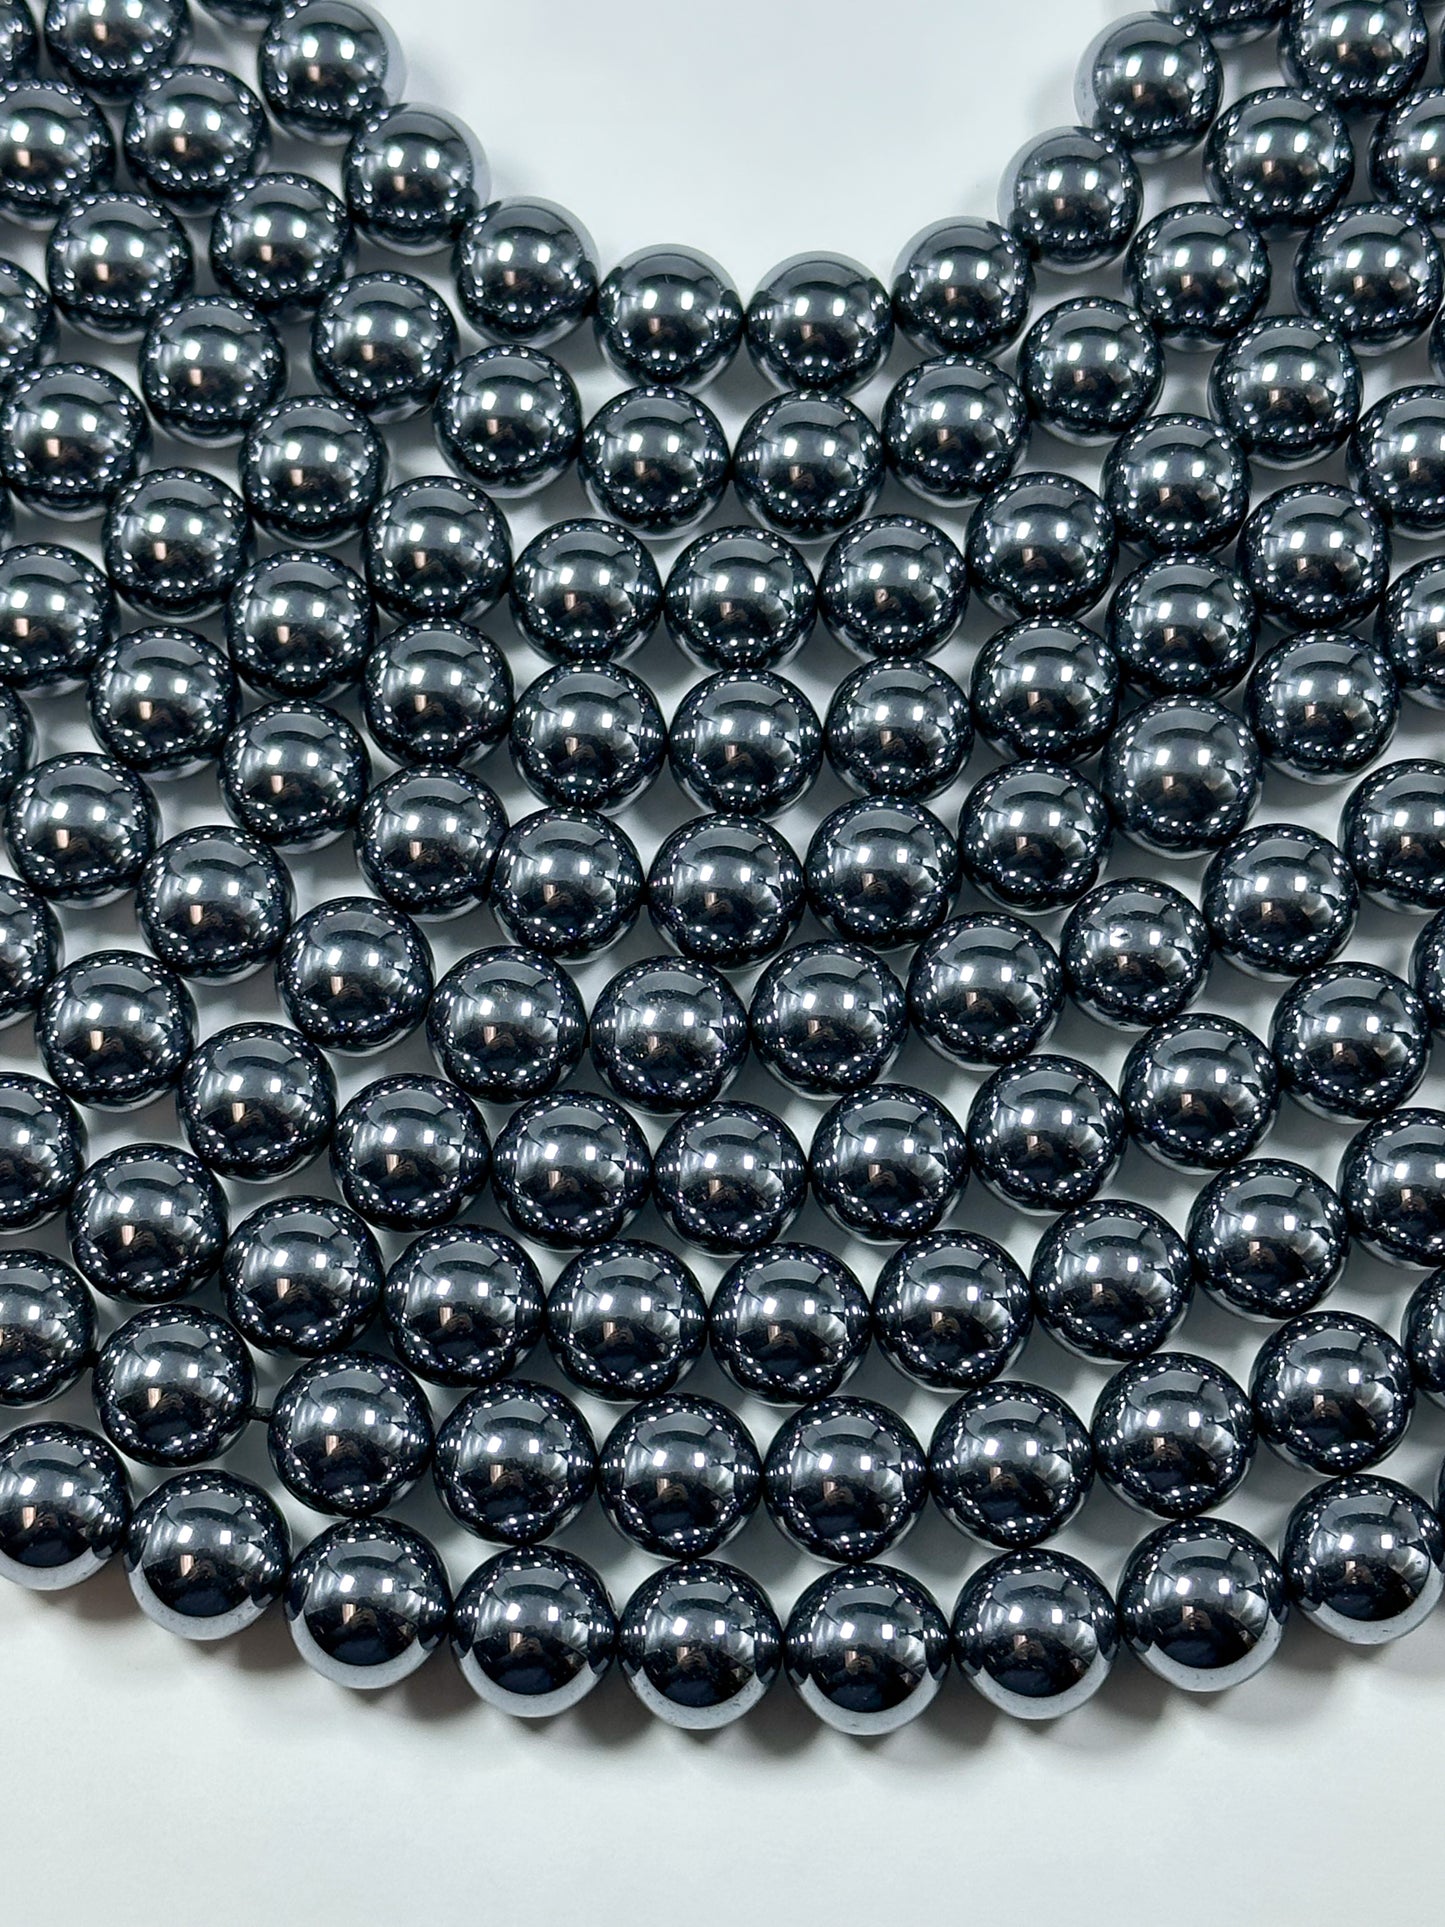 NATURAL Gunmetal Hematite Gemstone Bead, 4mm 6mm 8mm 10mm Round Beads, Gorgeous Gunmetal Dark Gray Color Loose Beads Full Strand 15.5"